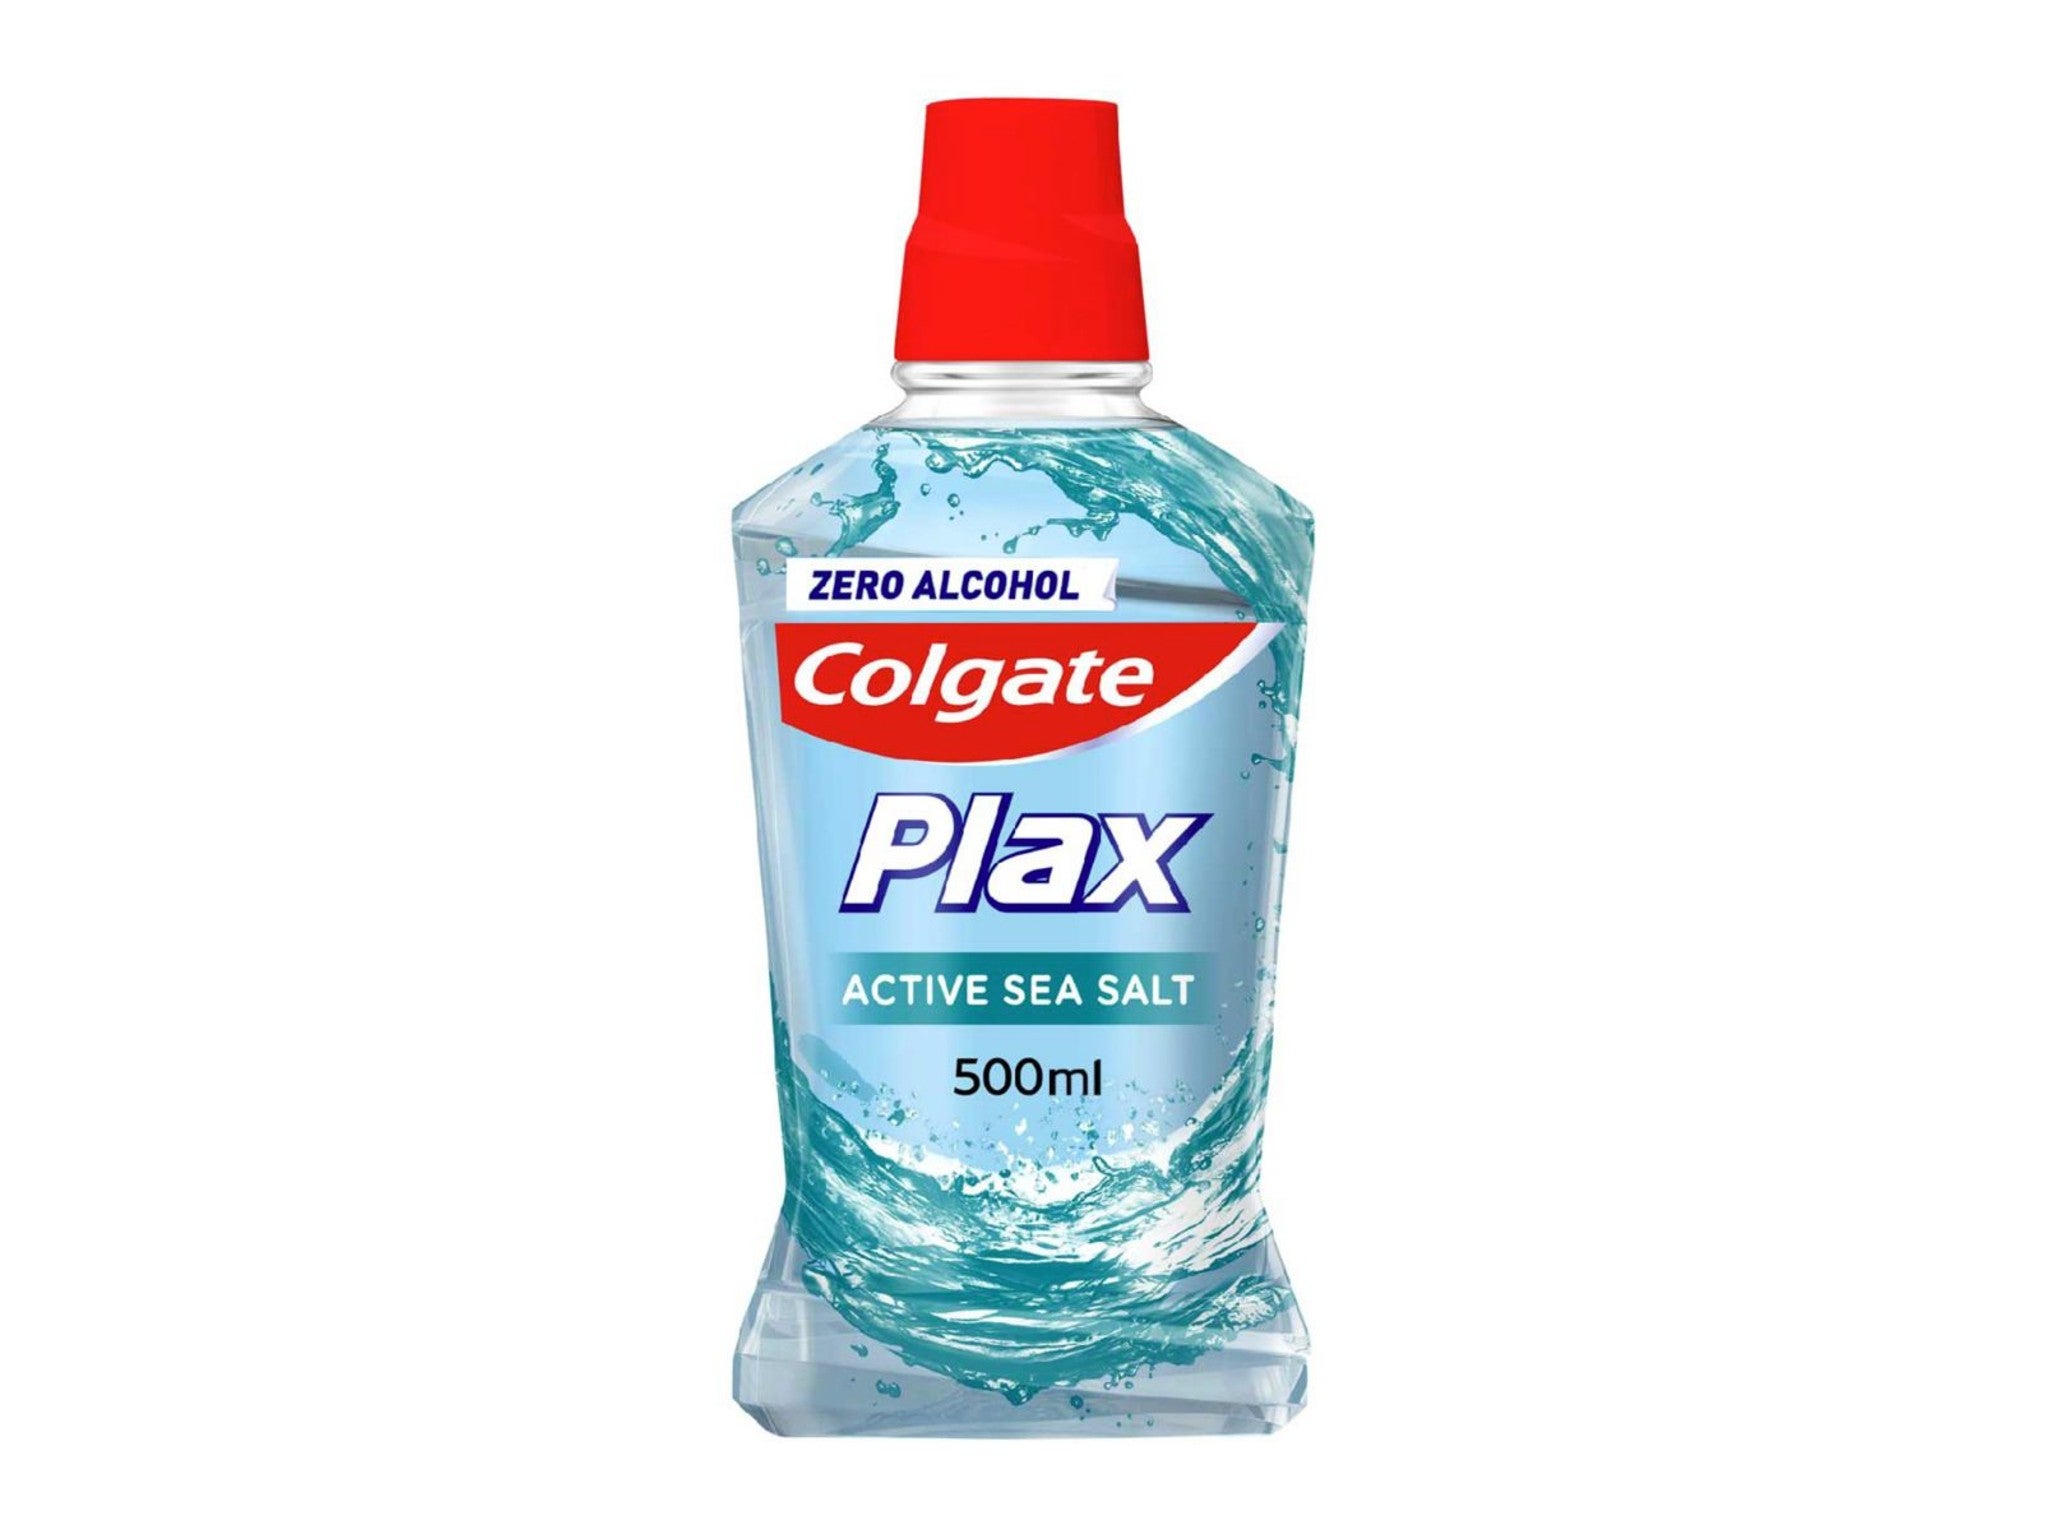 Colgate plax active sea salt indybest.jpg